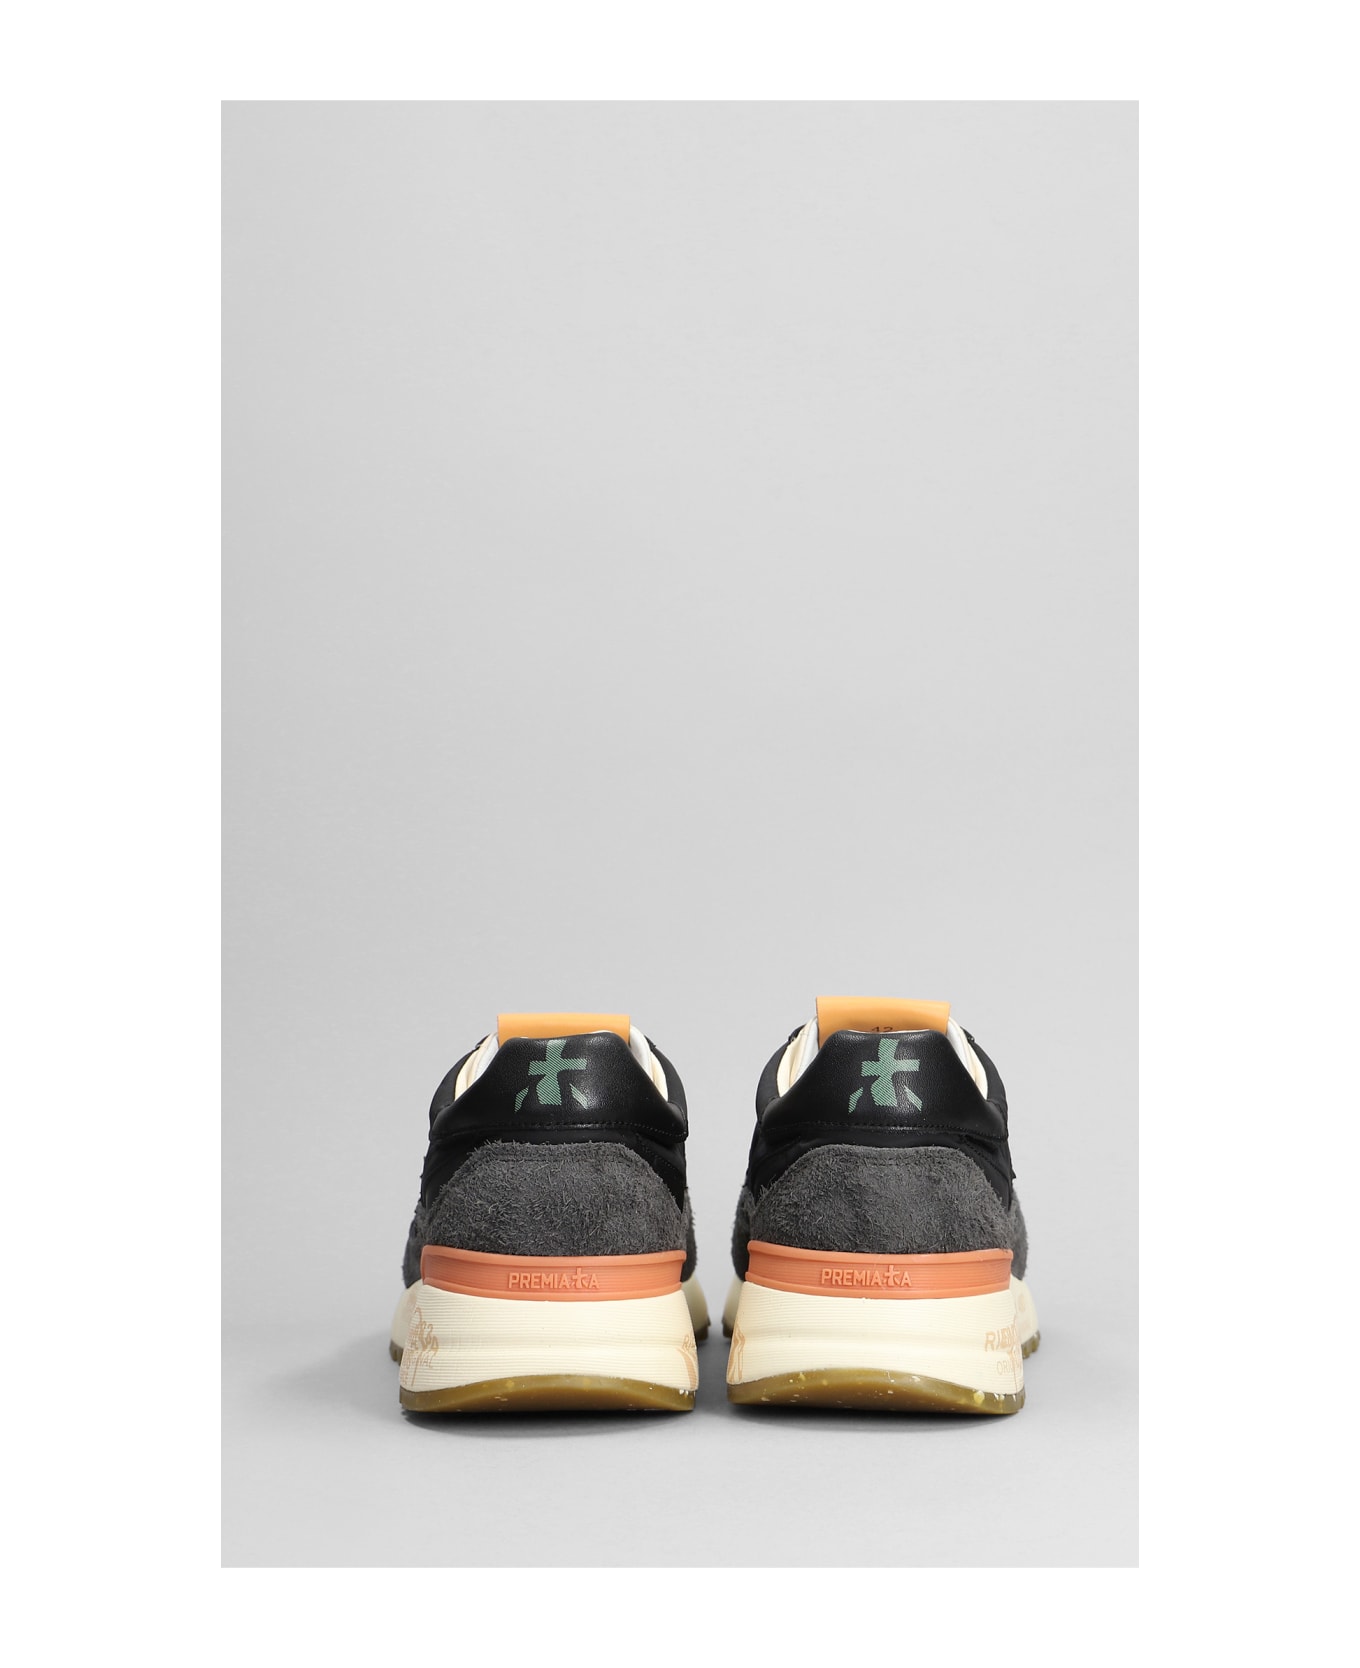 Premiata Landeck Sneakers In Black Suede And Fabric